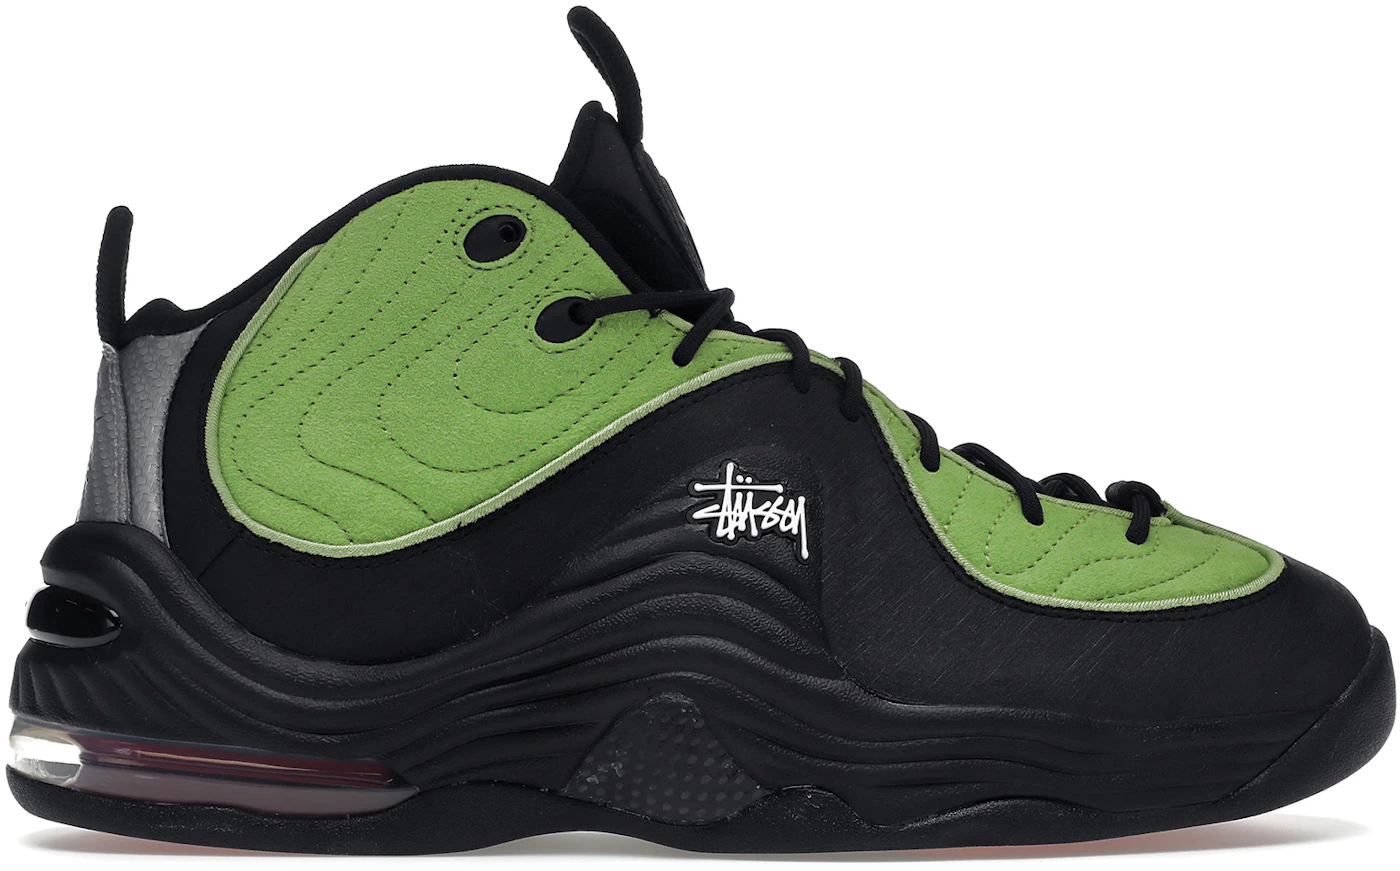 Stüssy x Nike Air Max Penny 2 Black/Vivid Green Release Date